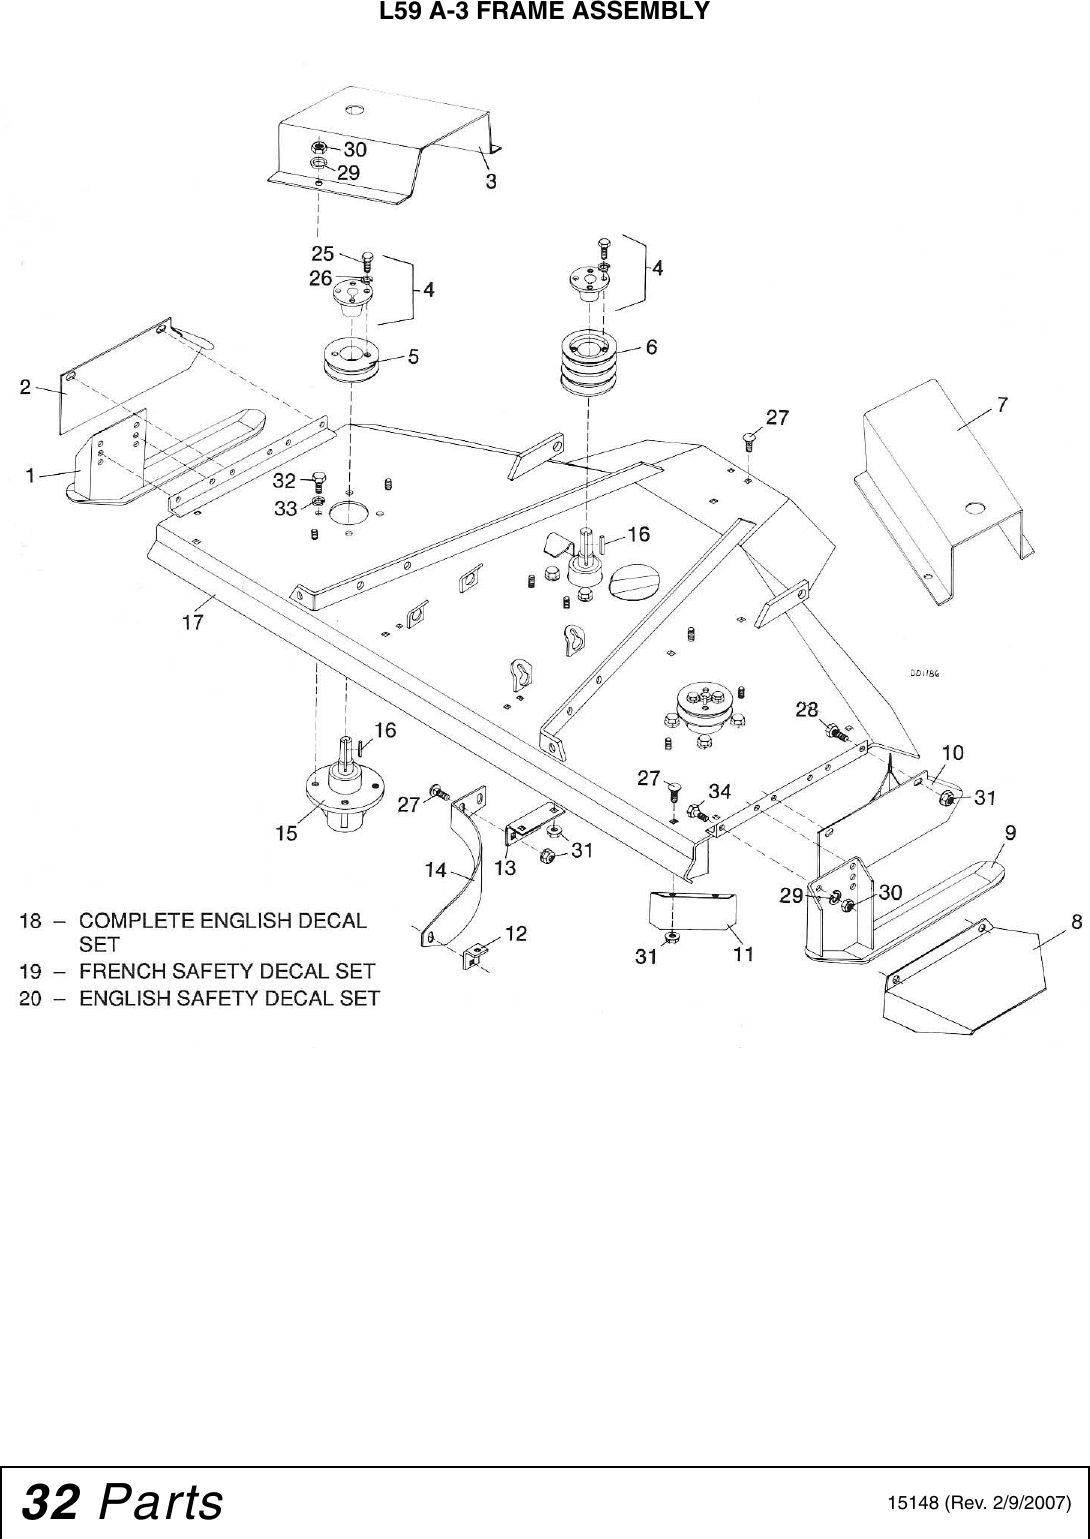 Woods Rm 306 Parts Diagram Wiring Diagram